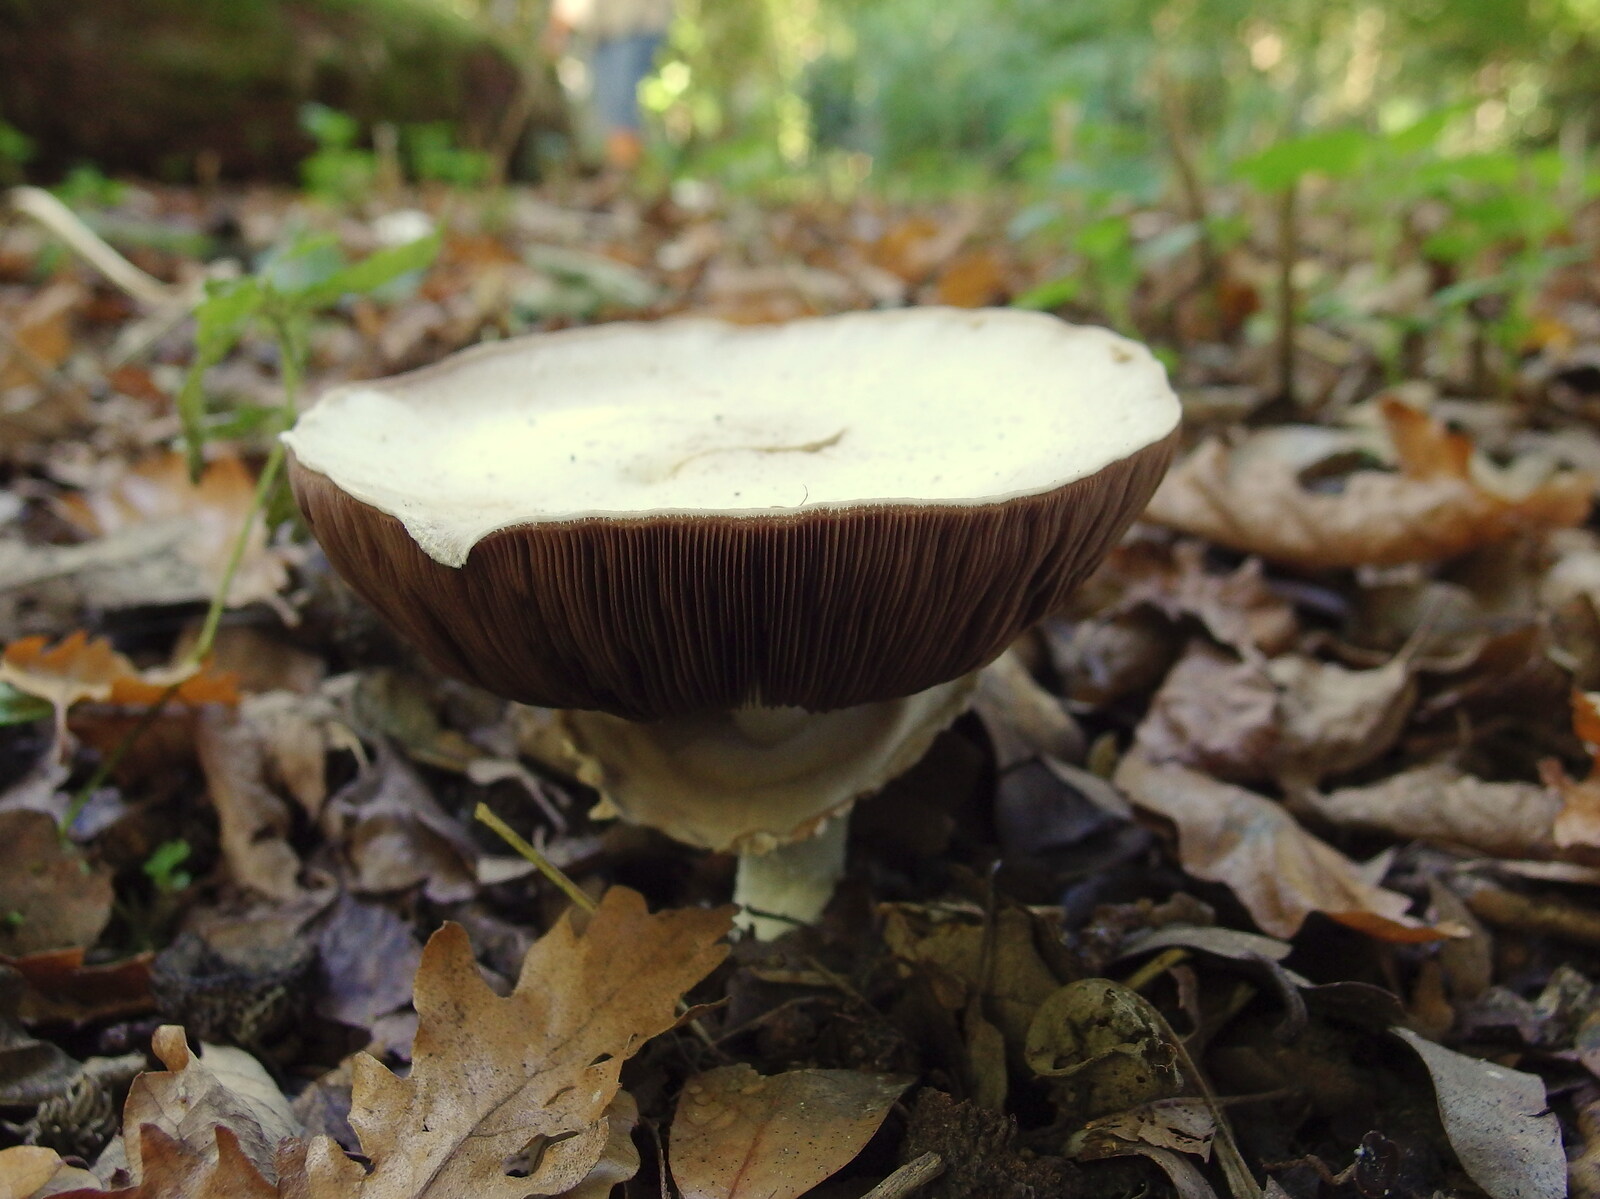 A mushroom's gills from A Walk Around Thornham, and Jacqui Dankworth, Bungay, Suffolk - 6th October 2013